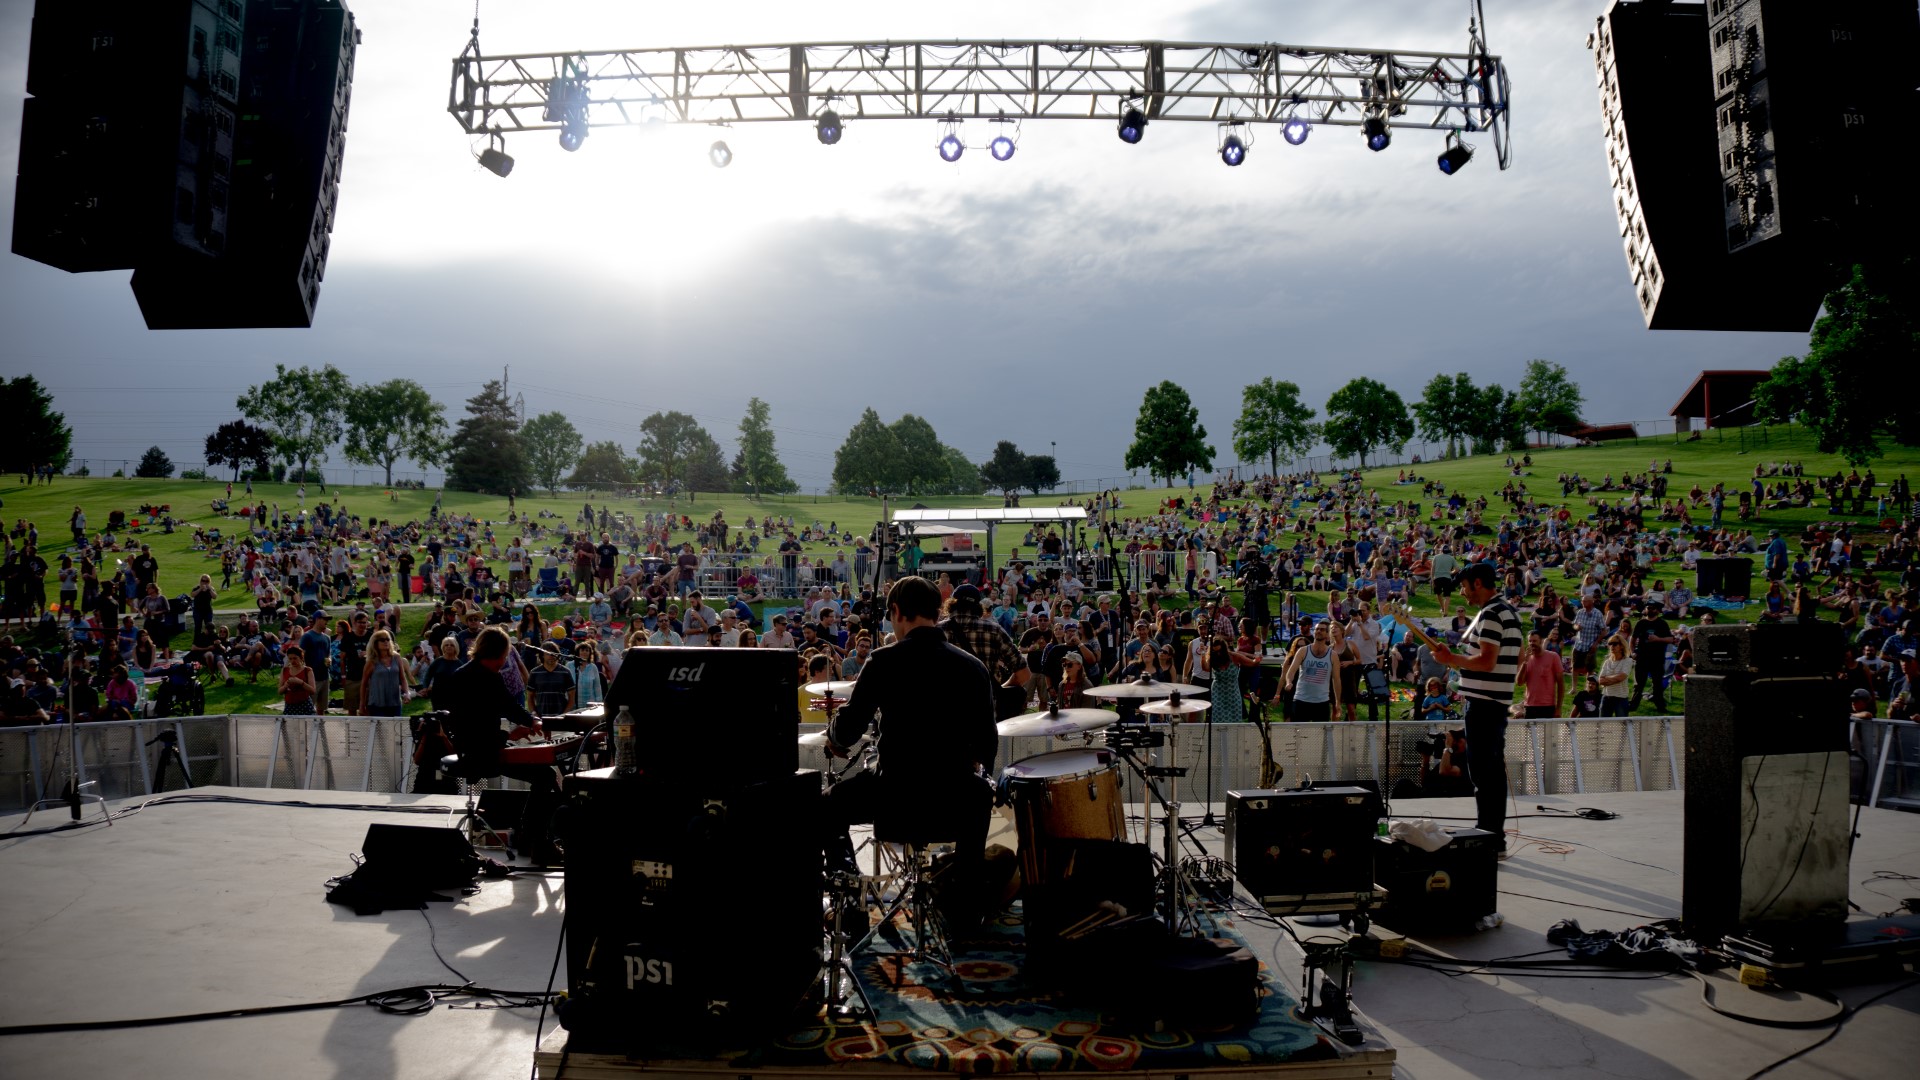 Levitt Pavilion Denver free summer concert series is back in 2021